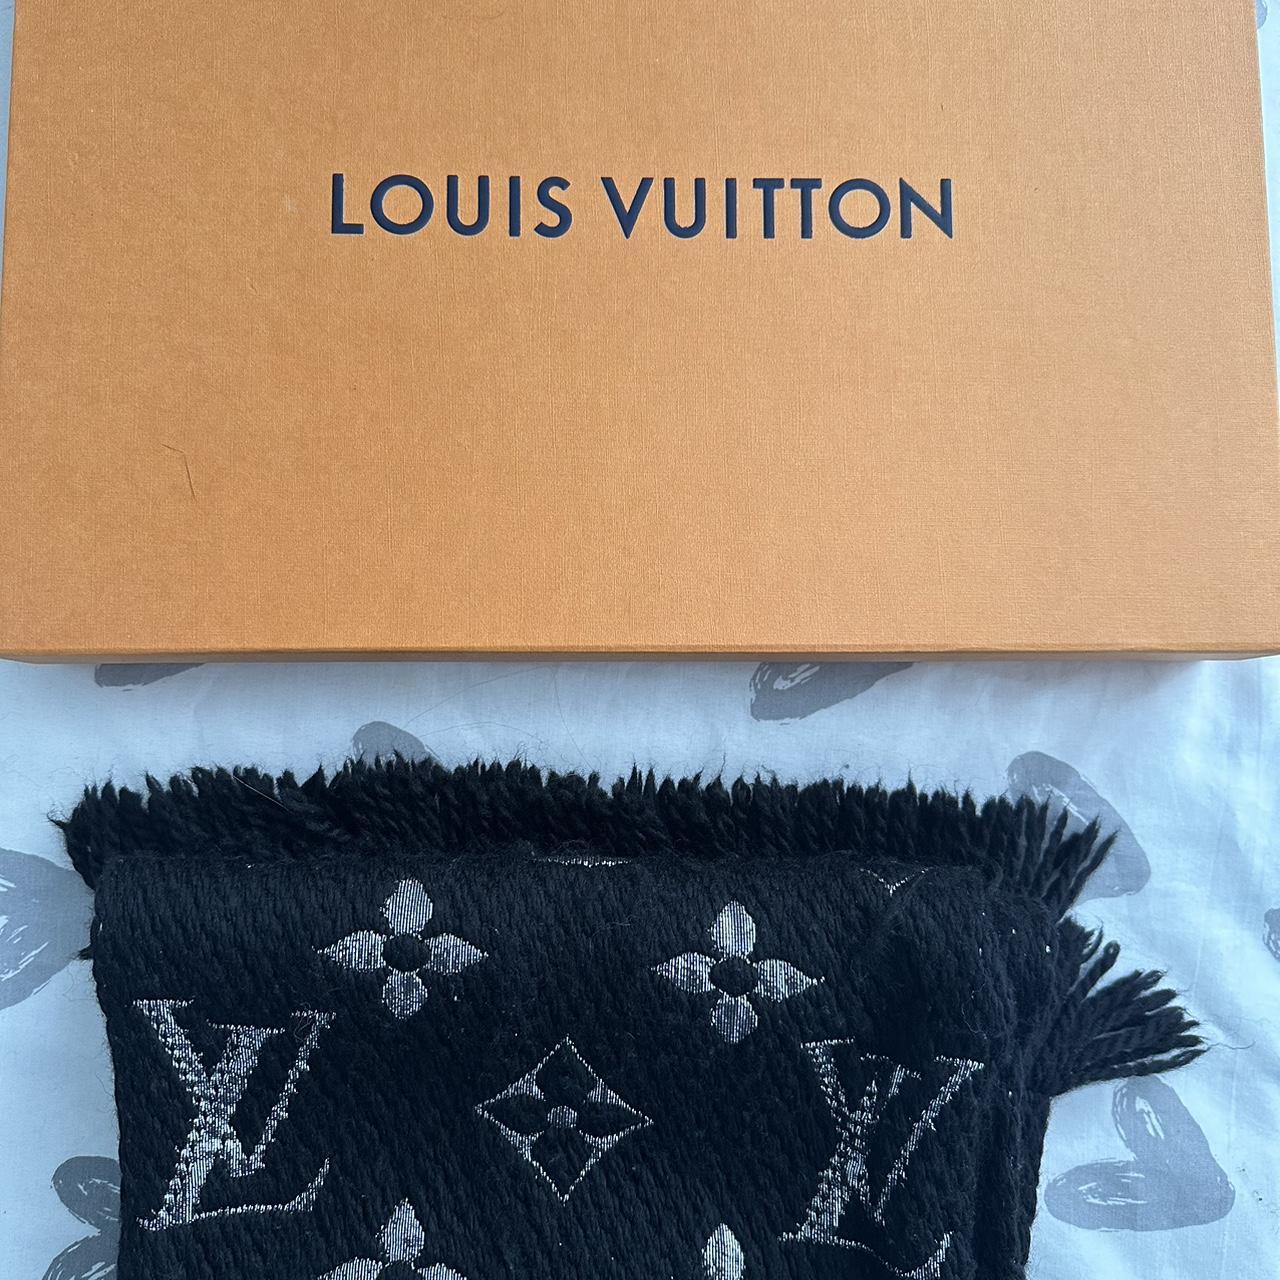 Louis Vuitton Scarf in Red 100% Authentic Worn - Depop